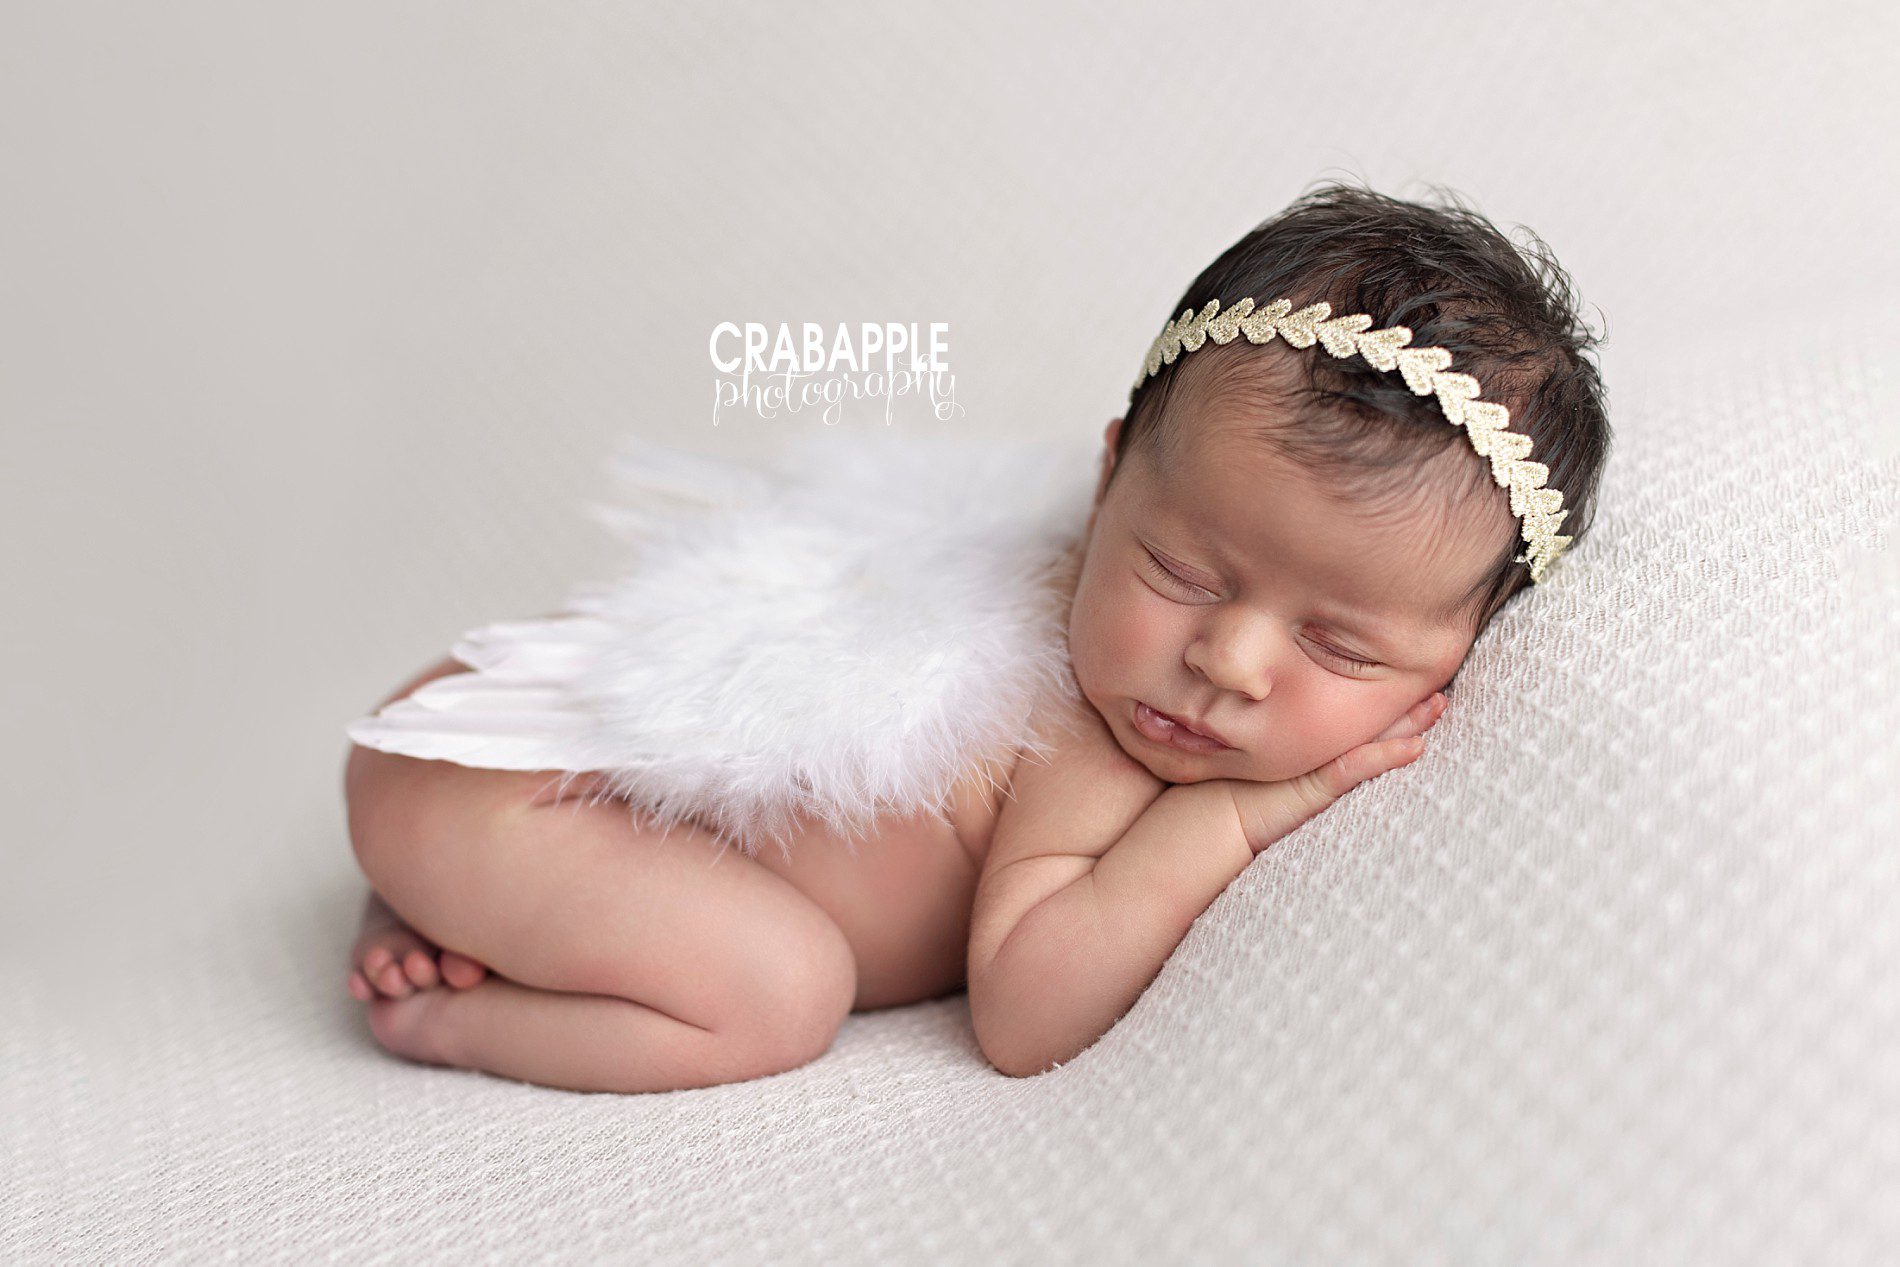 8 Week Old Newborn Photo Shoot | Natural Baby Photography